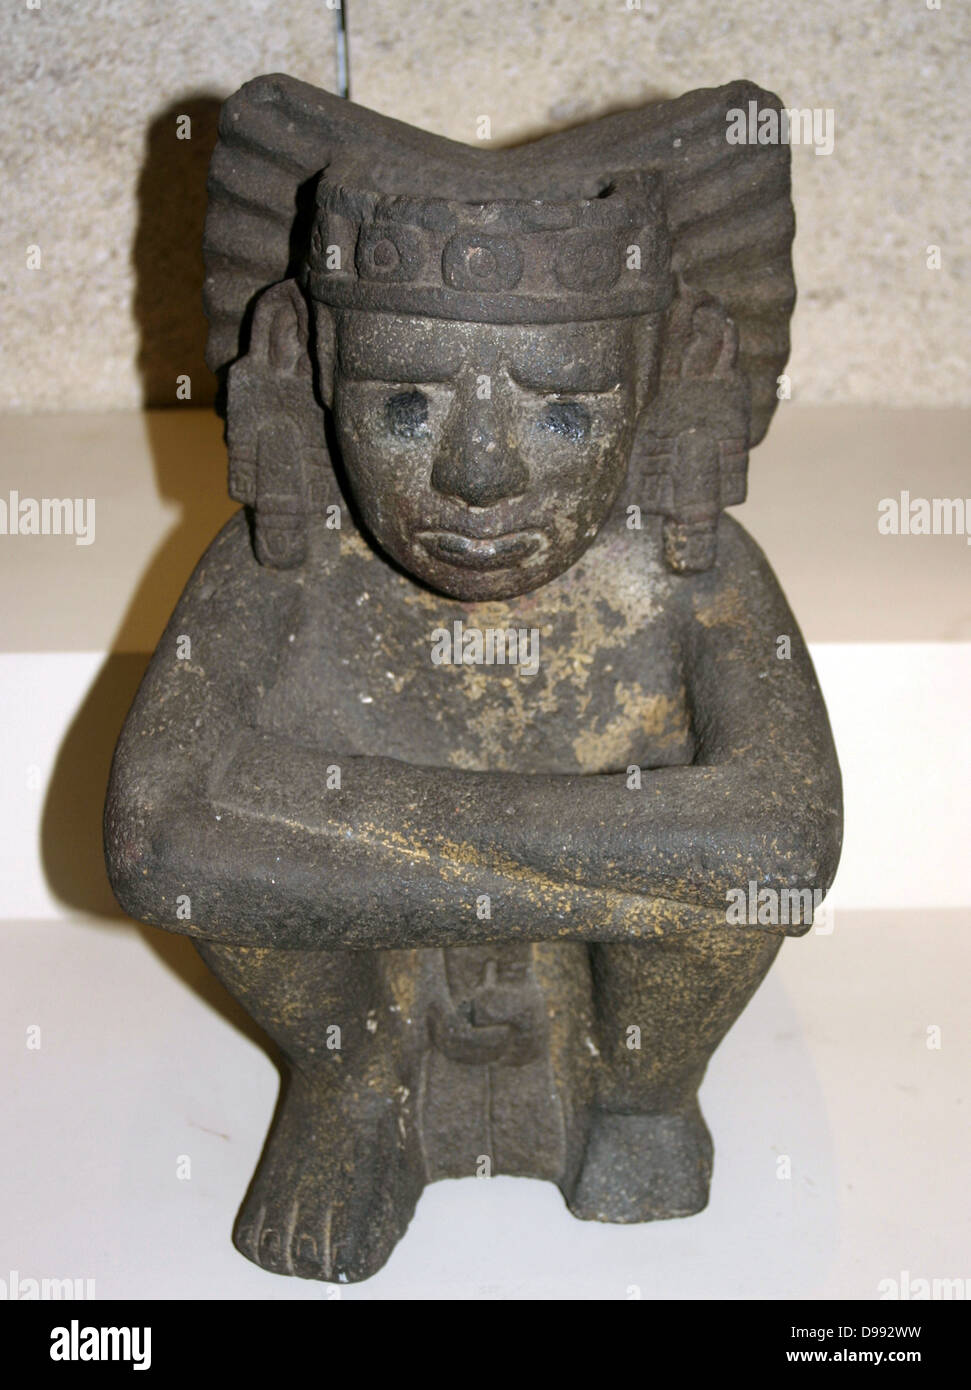 Seated stone figure of Xiuhtecuhtli: Aztec, AD 1325-1521, from Mexico. Xiuhtecuhtli, was the Aztec god of fire. Pre-Columbian Mesoamerican Mythology Sculpture Stock Photo